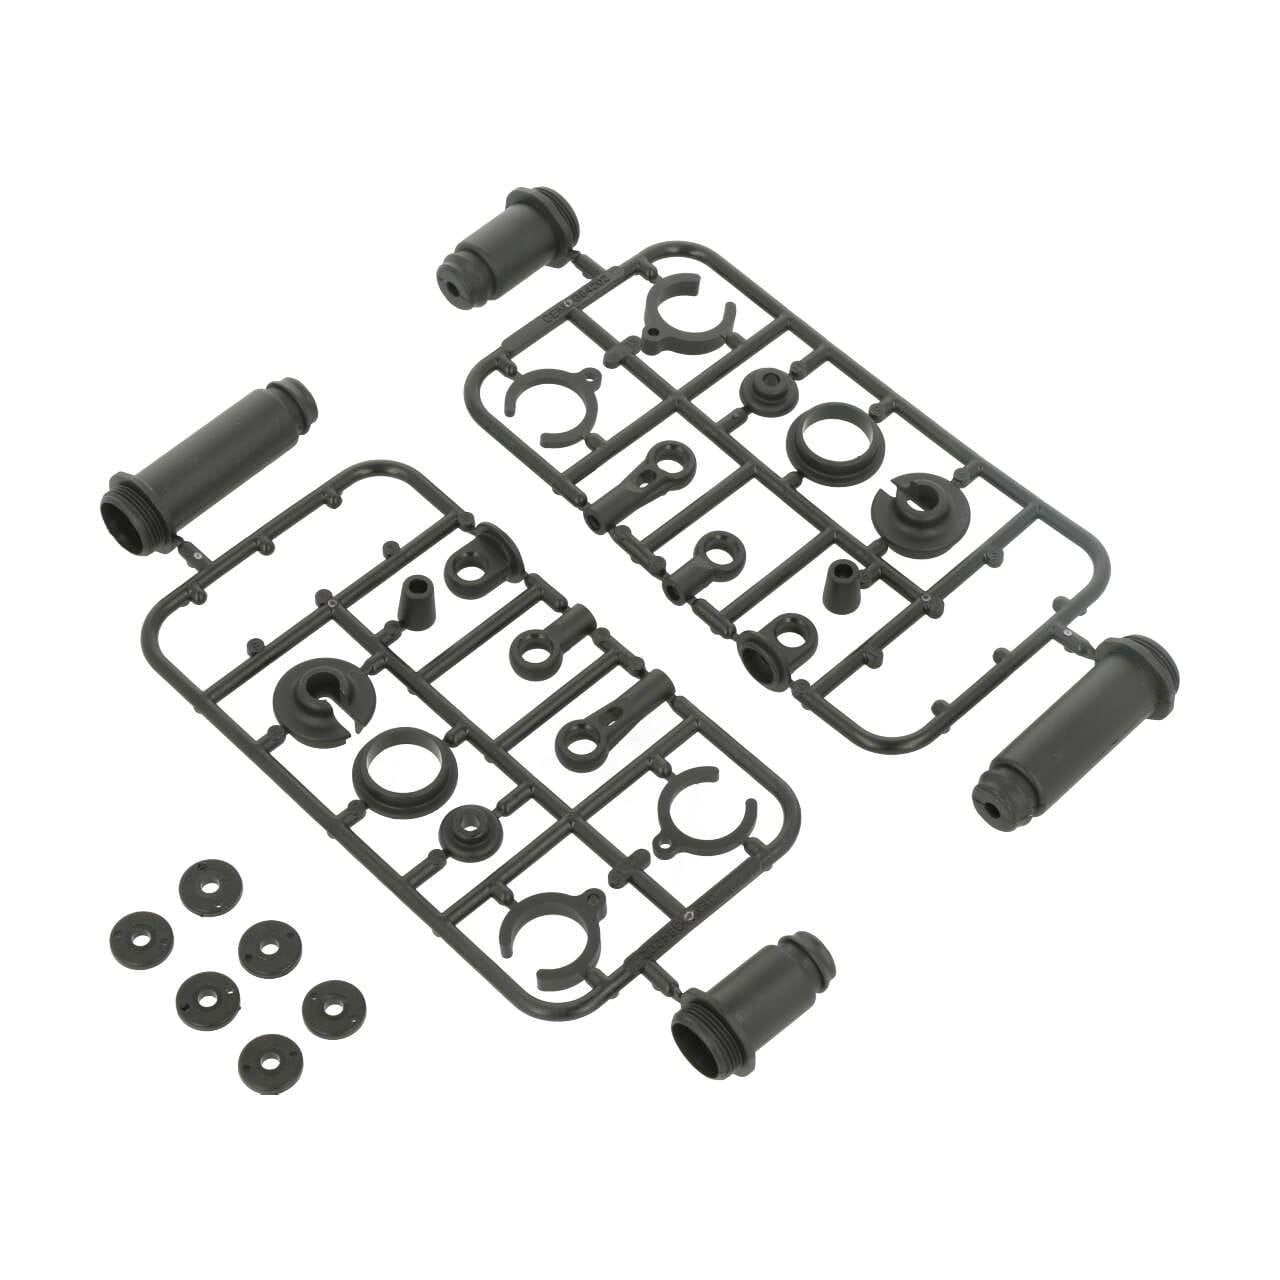 CEN Racing Shock Plastic Parts (for 2 shocks)